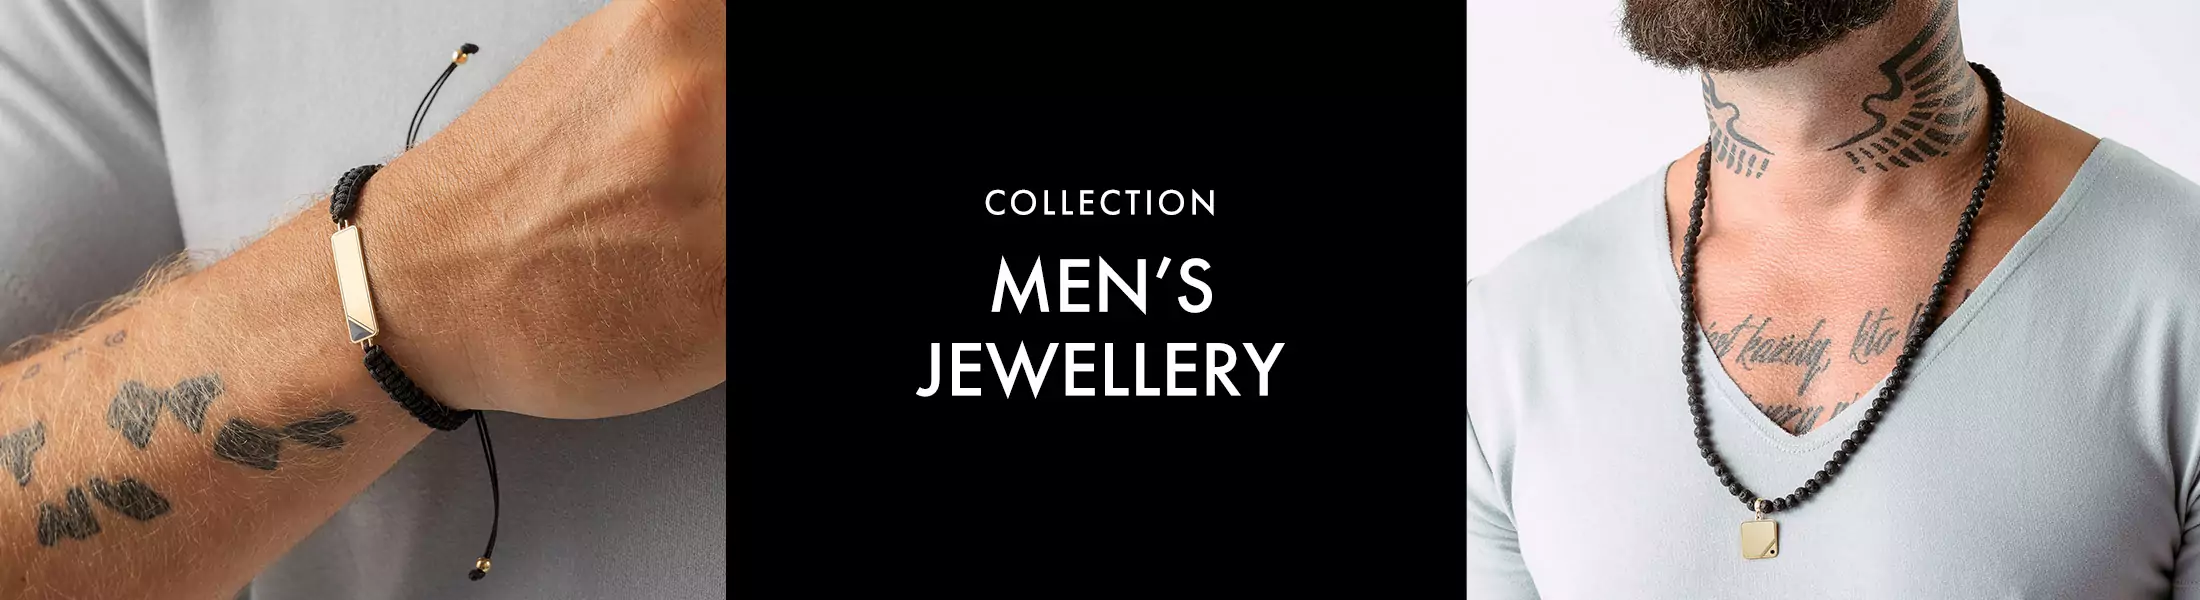 Jewelry for men